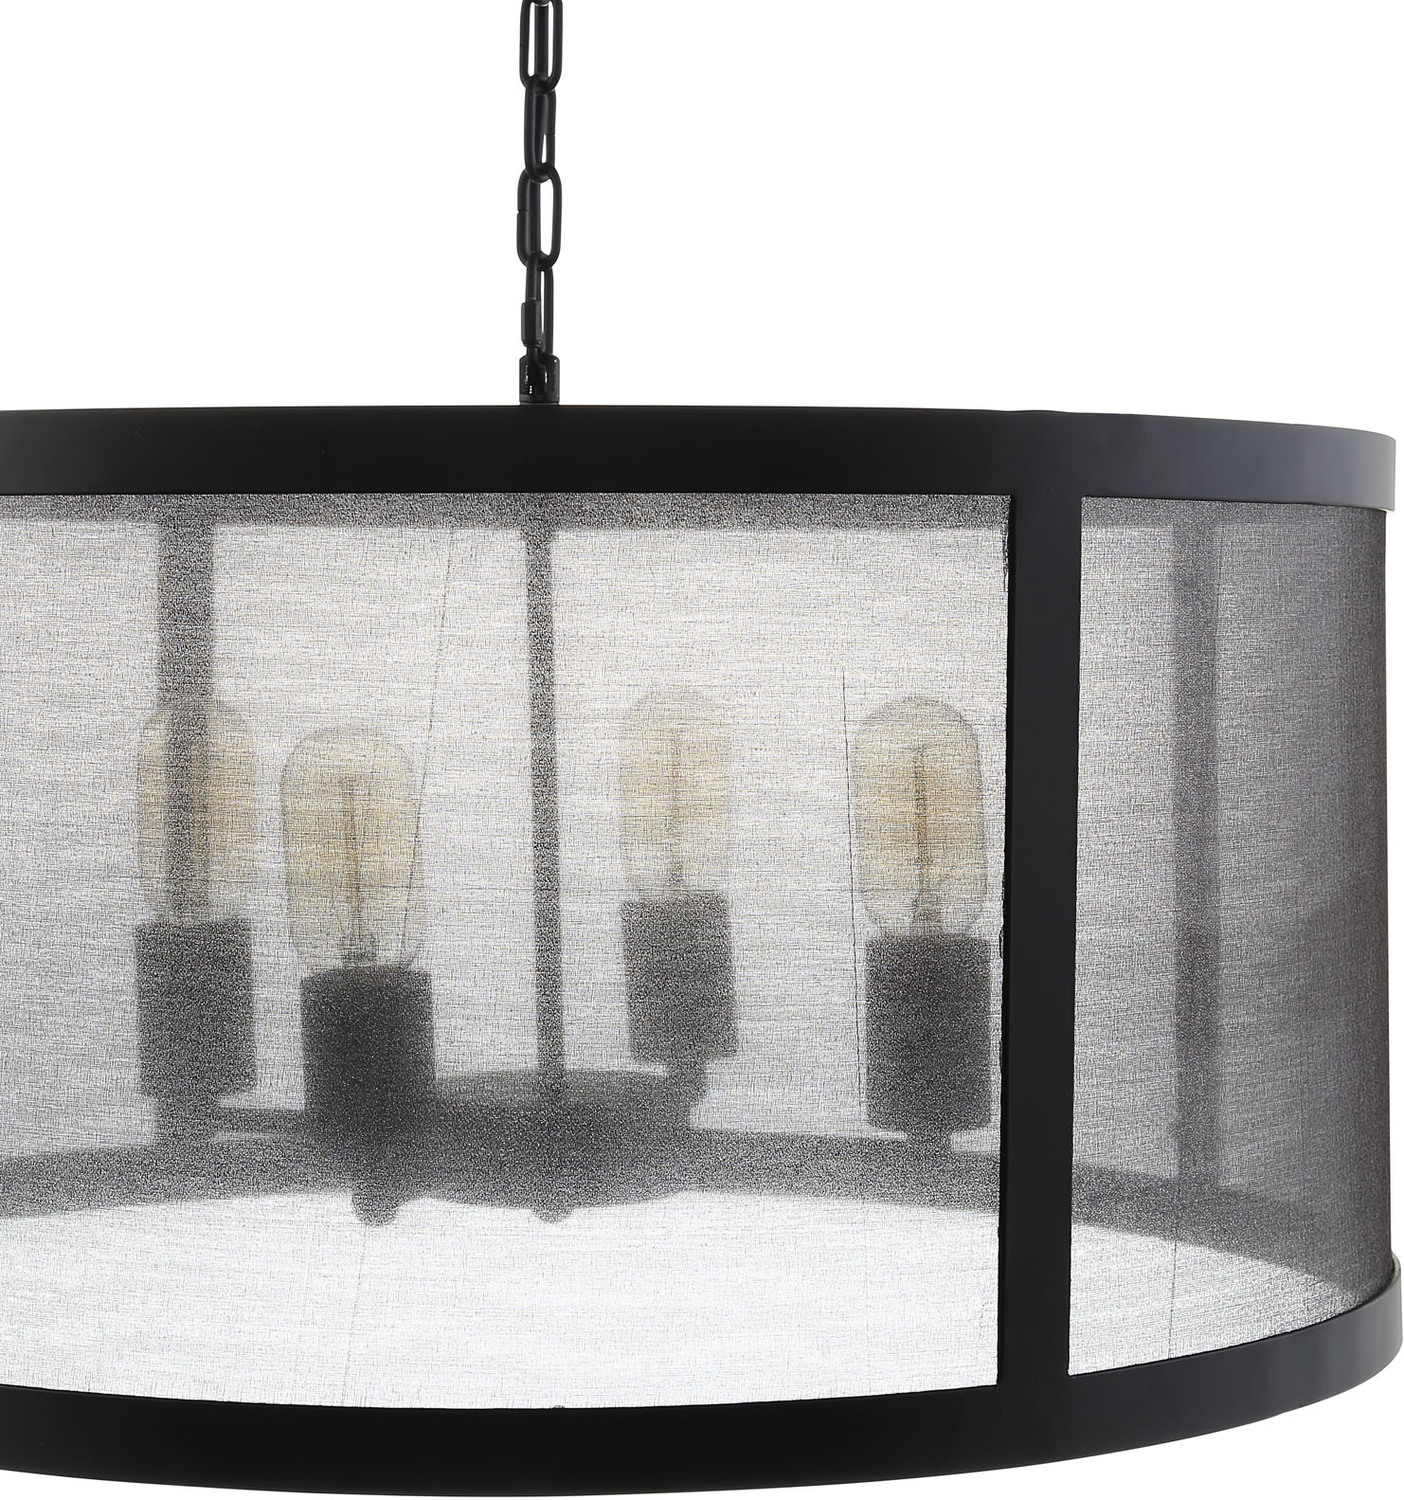 modern chandeliers online Modway Furniture Ceiling Lamps Black